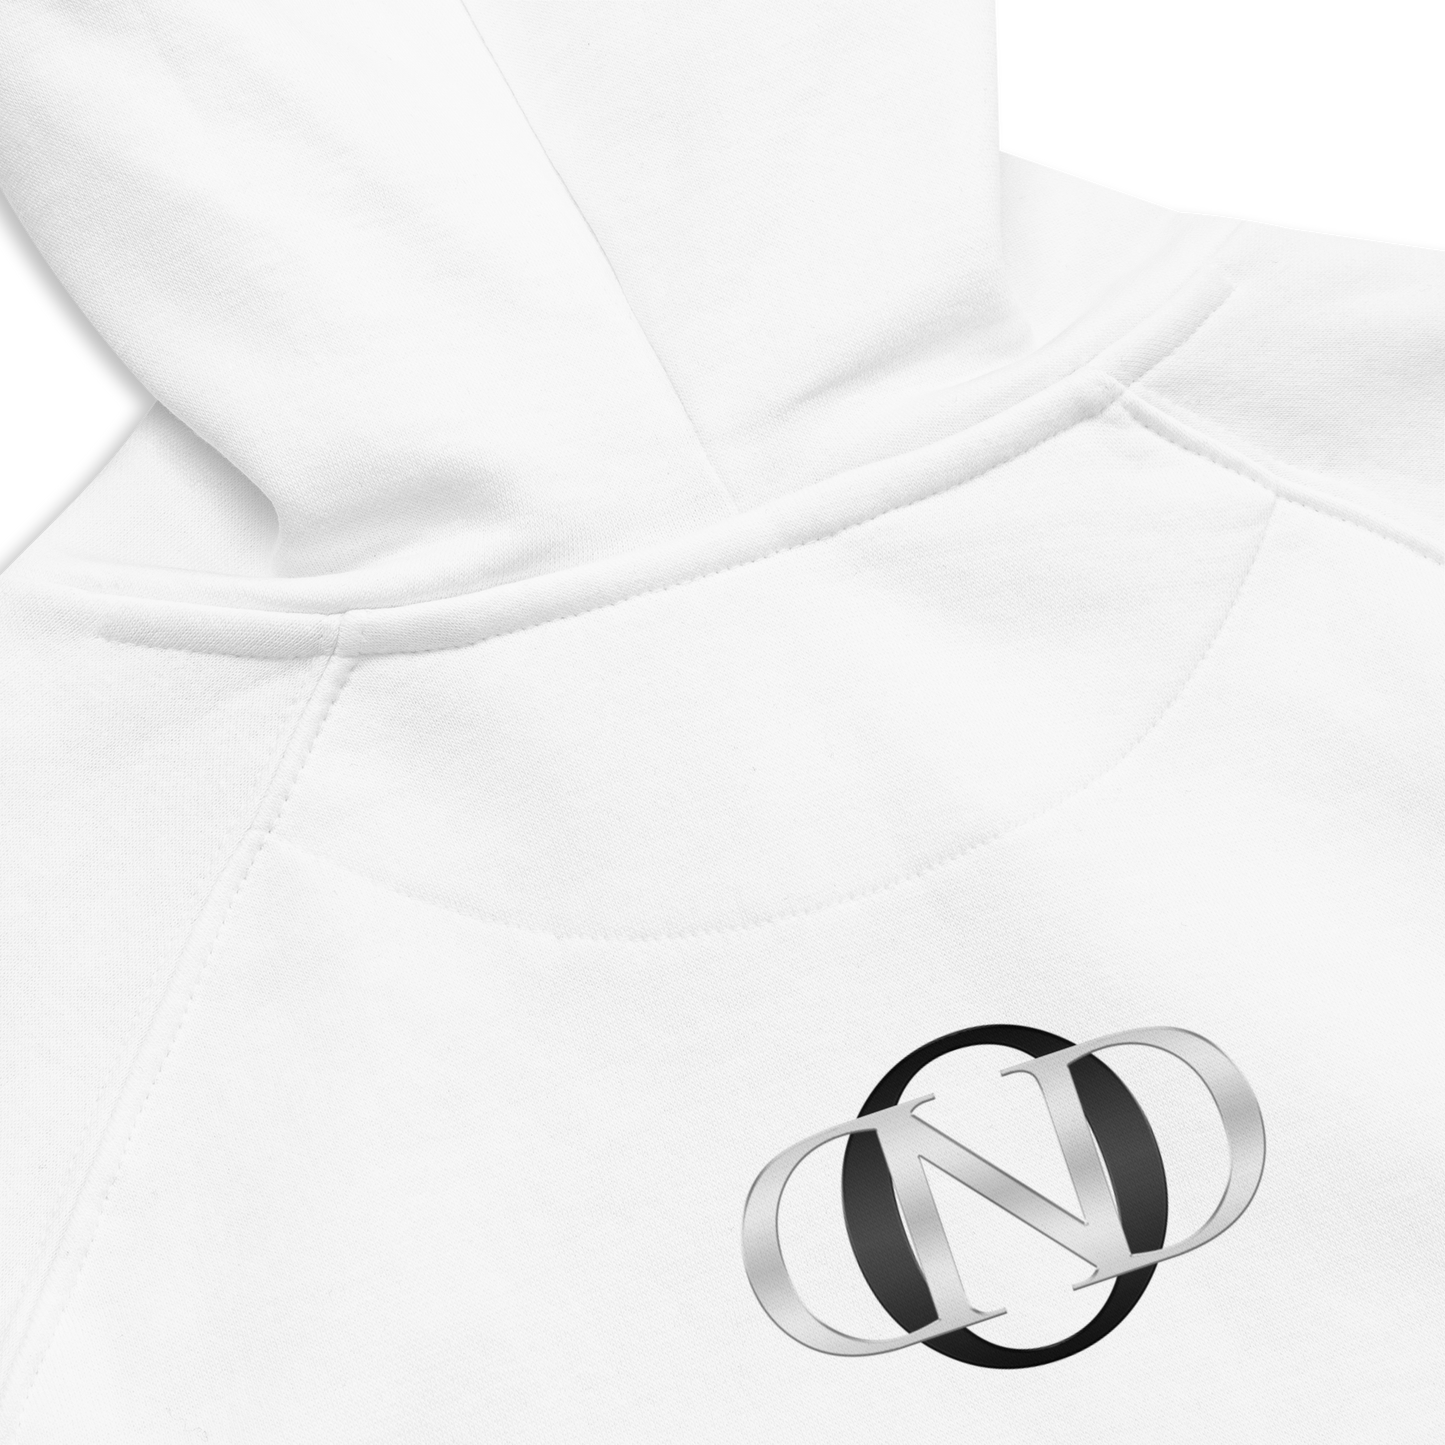 Unisex eco raglan hoodie Incept Leaves Neduz Designs